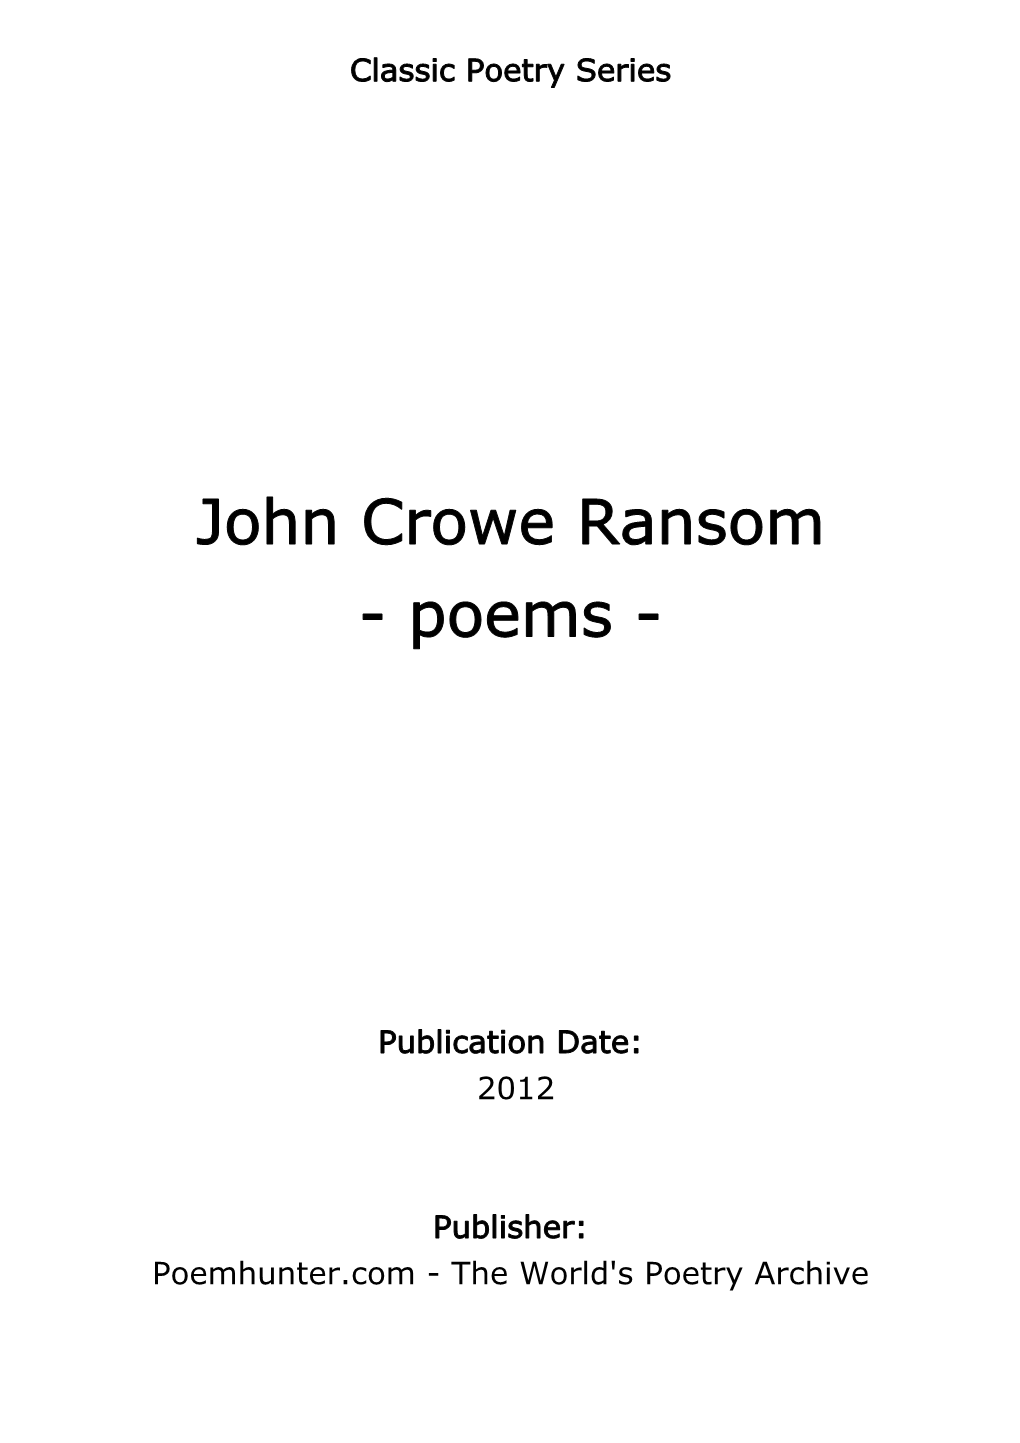 John Crowe Ransom - Poems